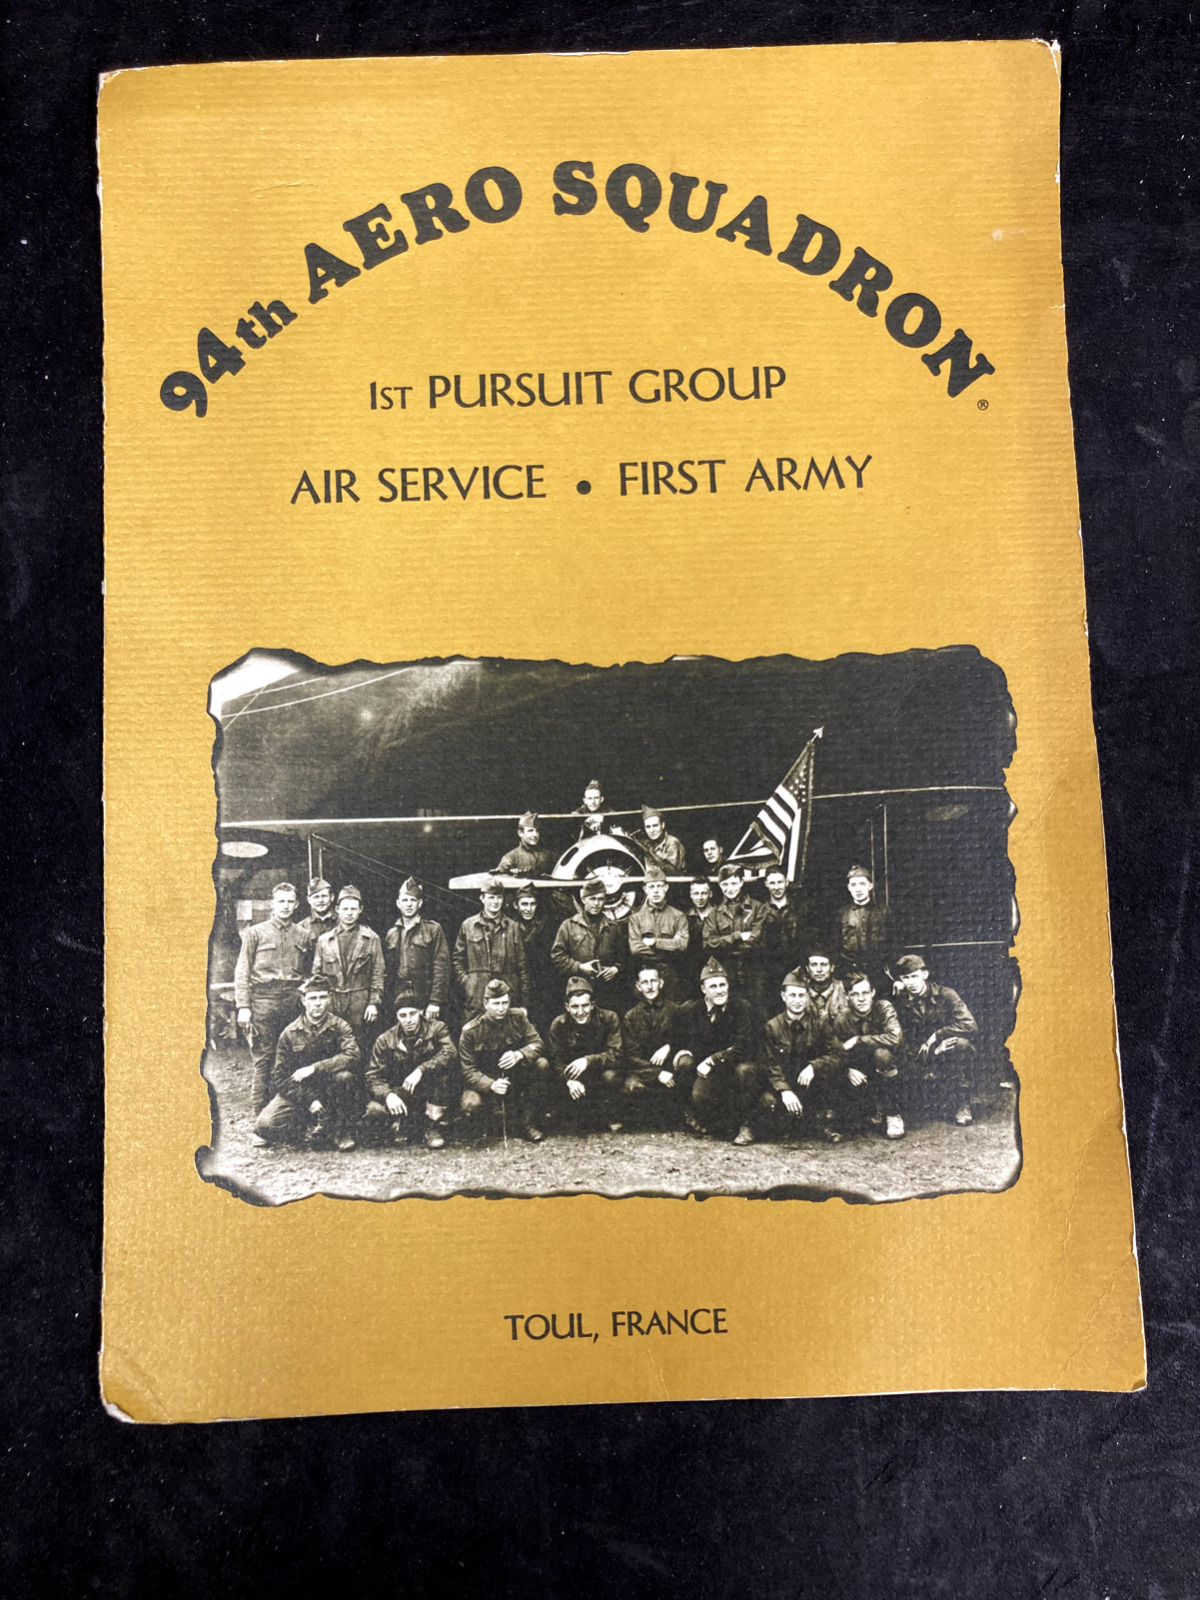 94TH AERO SQUADRON 1ST PURSUIT GROUP AIR SERVICE FIRST ARMY RESTAURANT MENU 1979